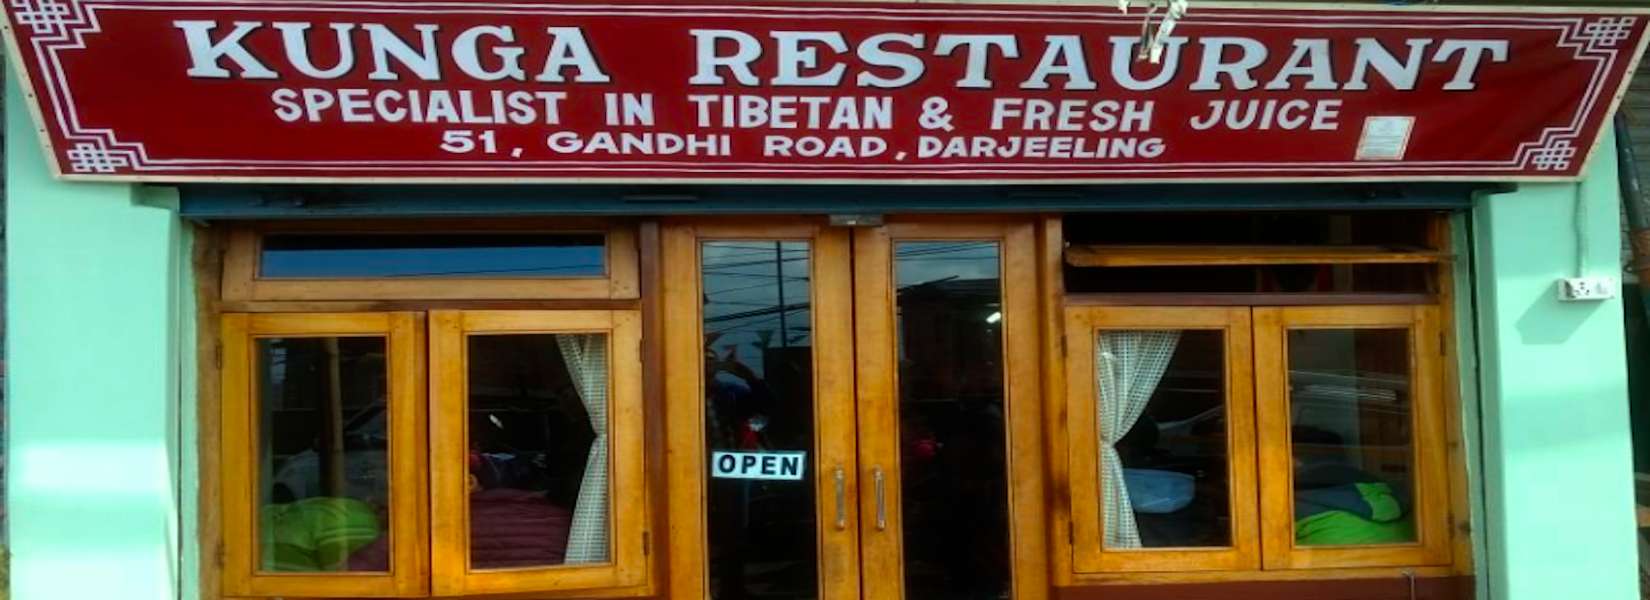 Kunga Restaurant in Darjeeling